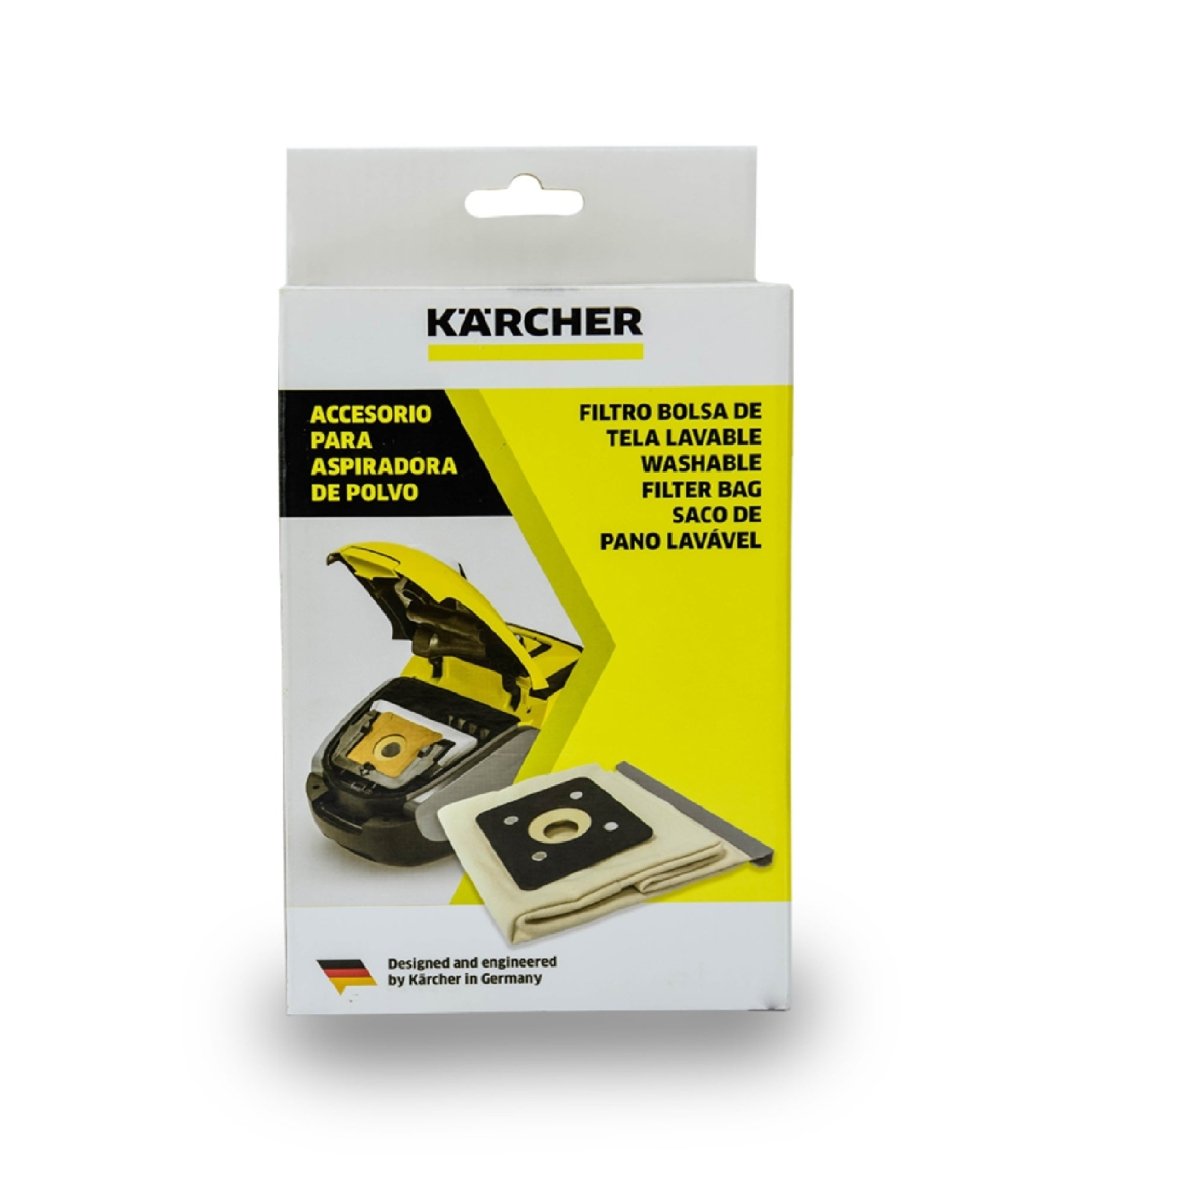 Bolsa de Filtro reutilizable para aspiradora Kärcher - Kärcher